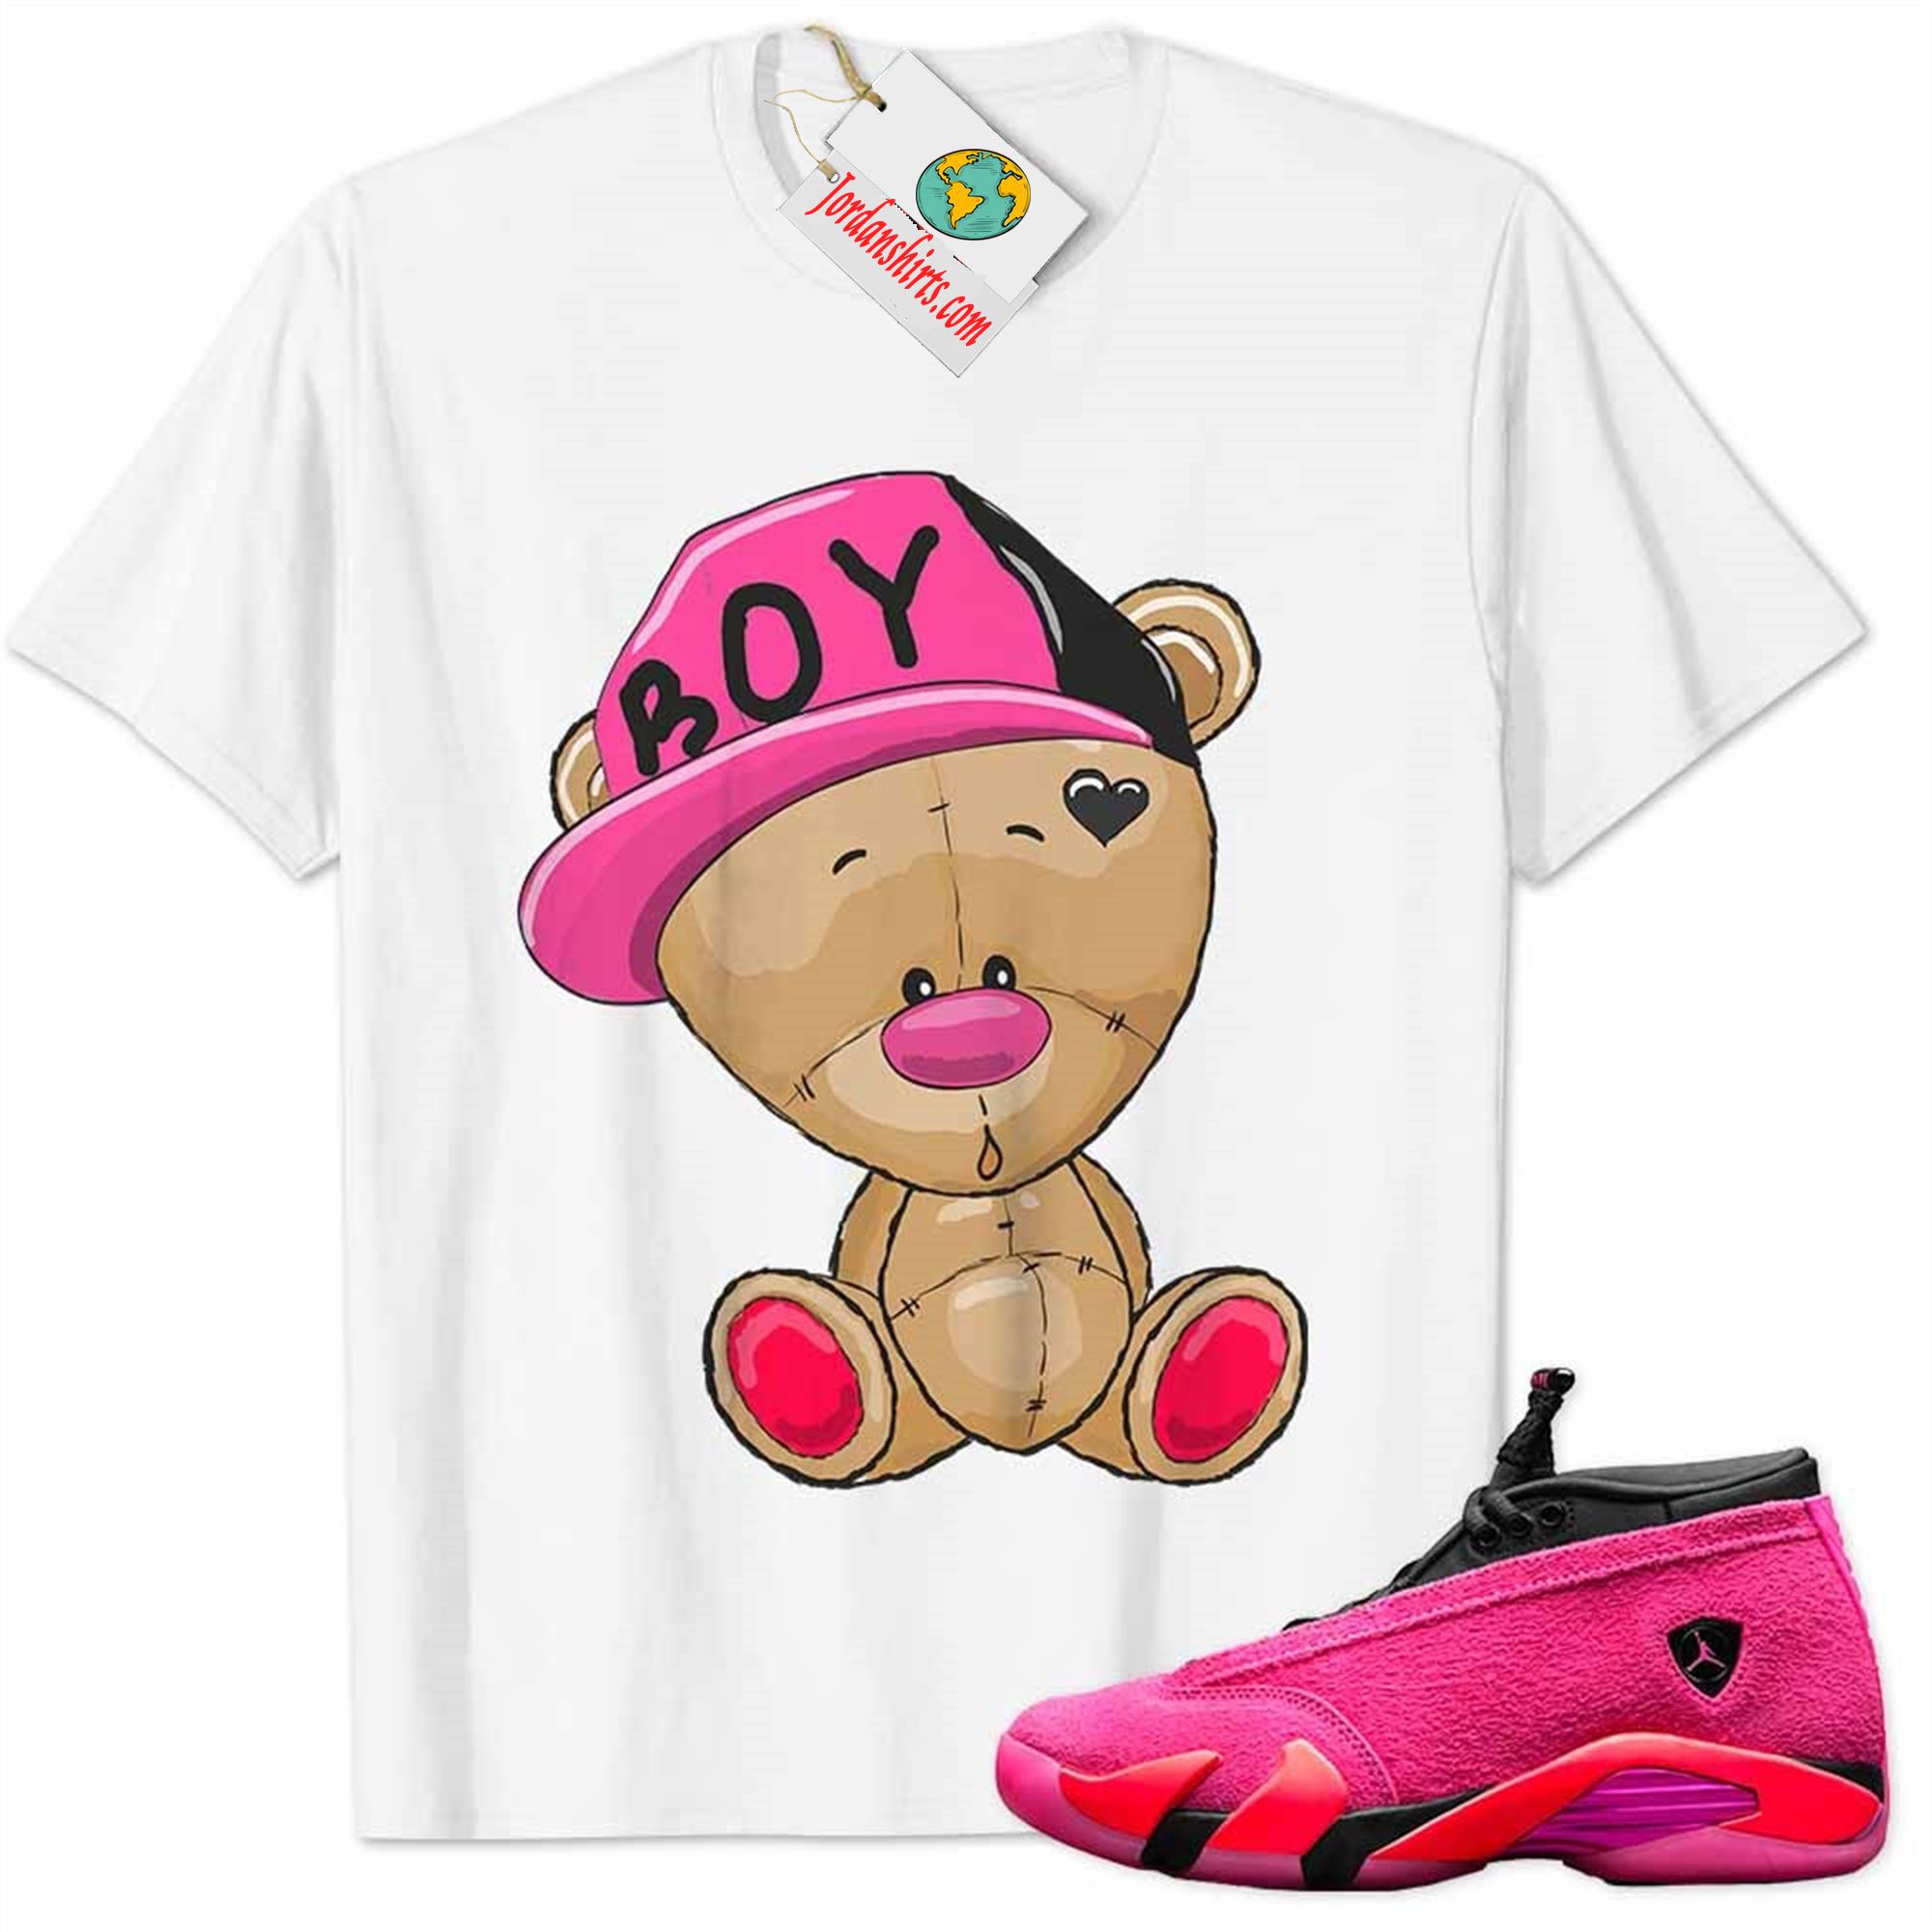 Jordan 14 Shirt, Jordan 14 Wmns Shocking Pink Shirt Cute Baby Teddy Bear White Plus Size Up To 5xl